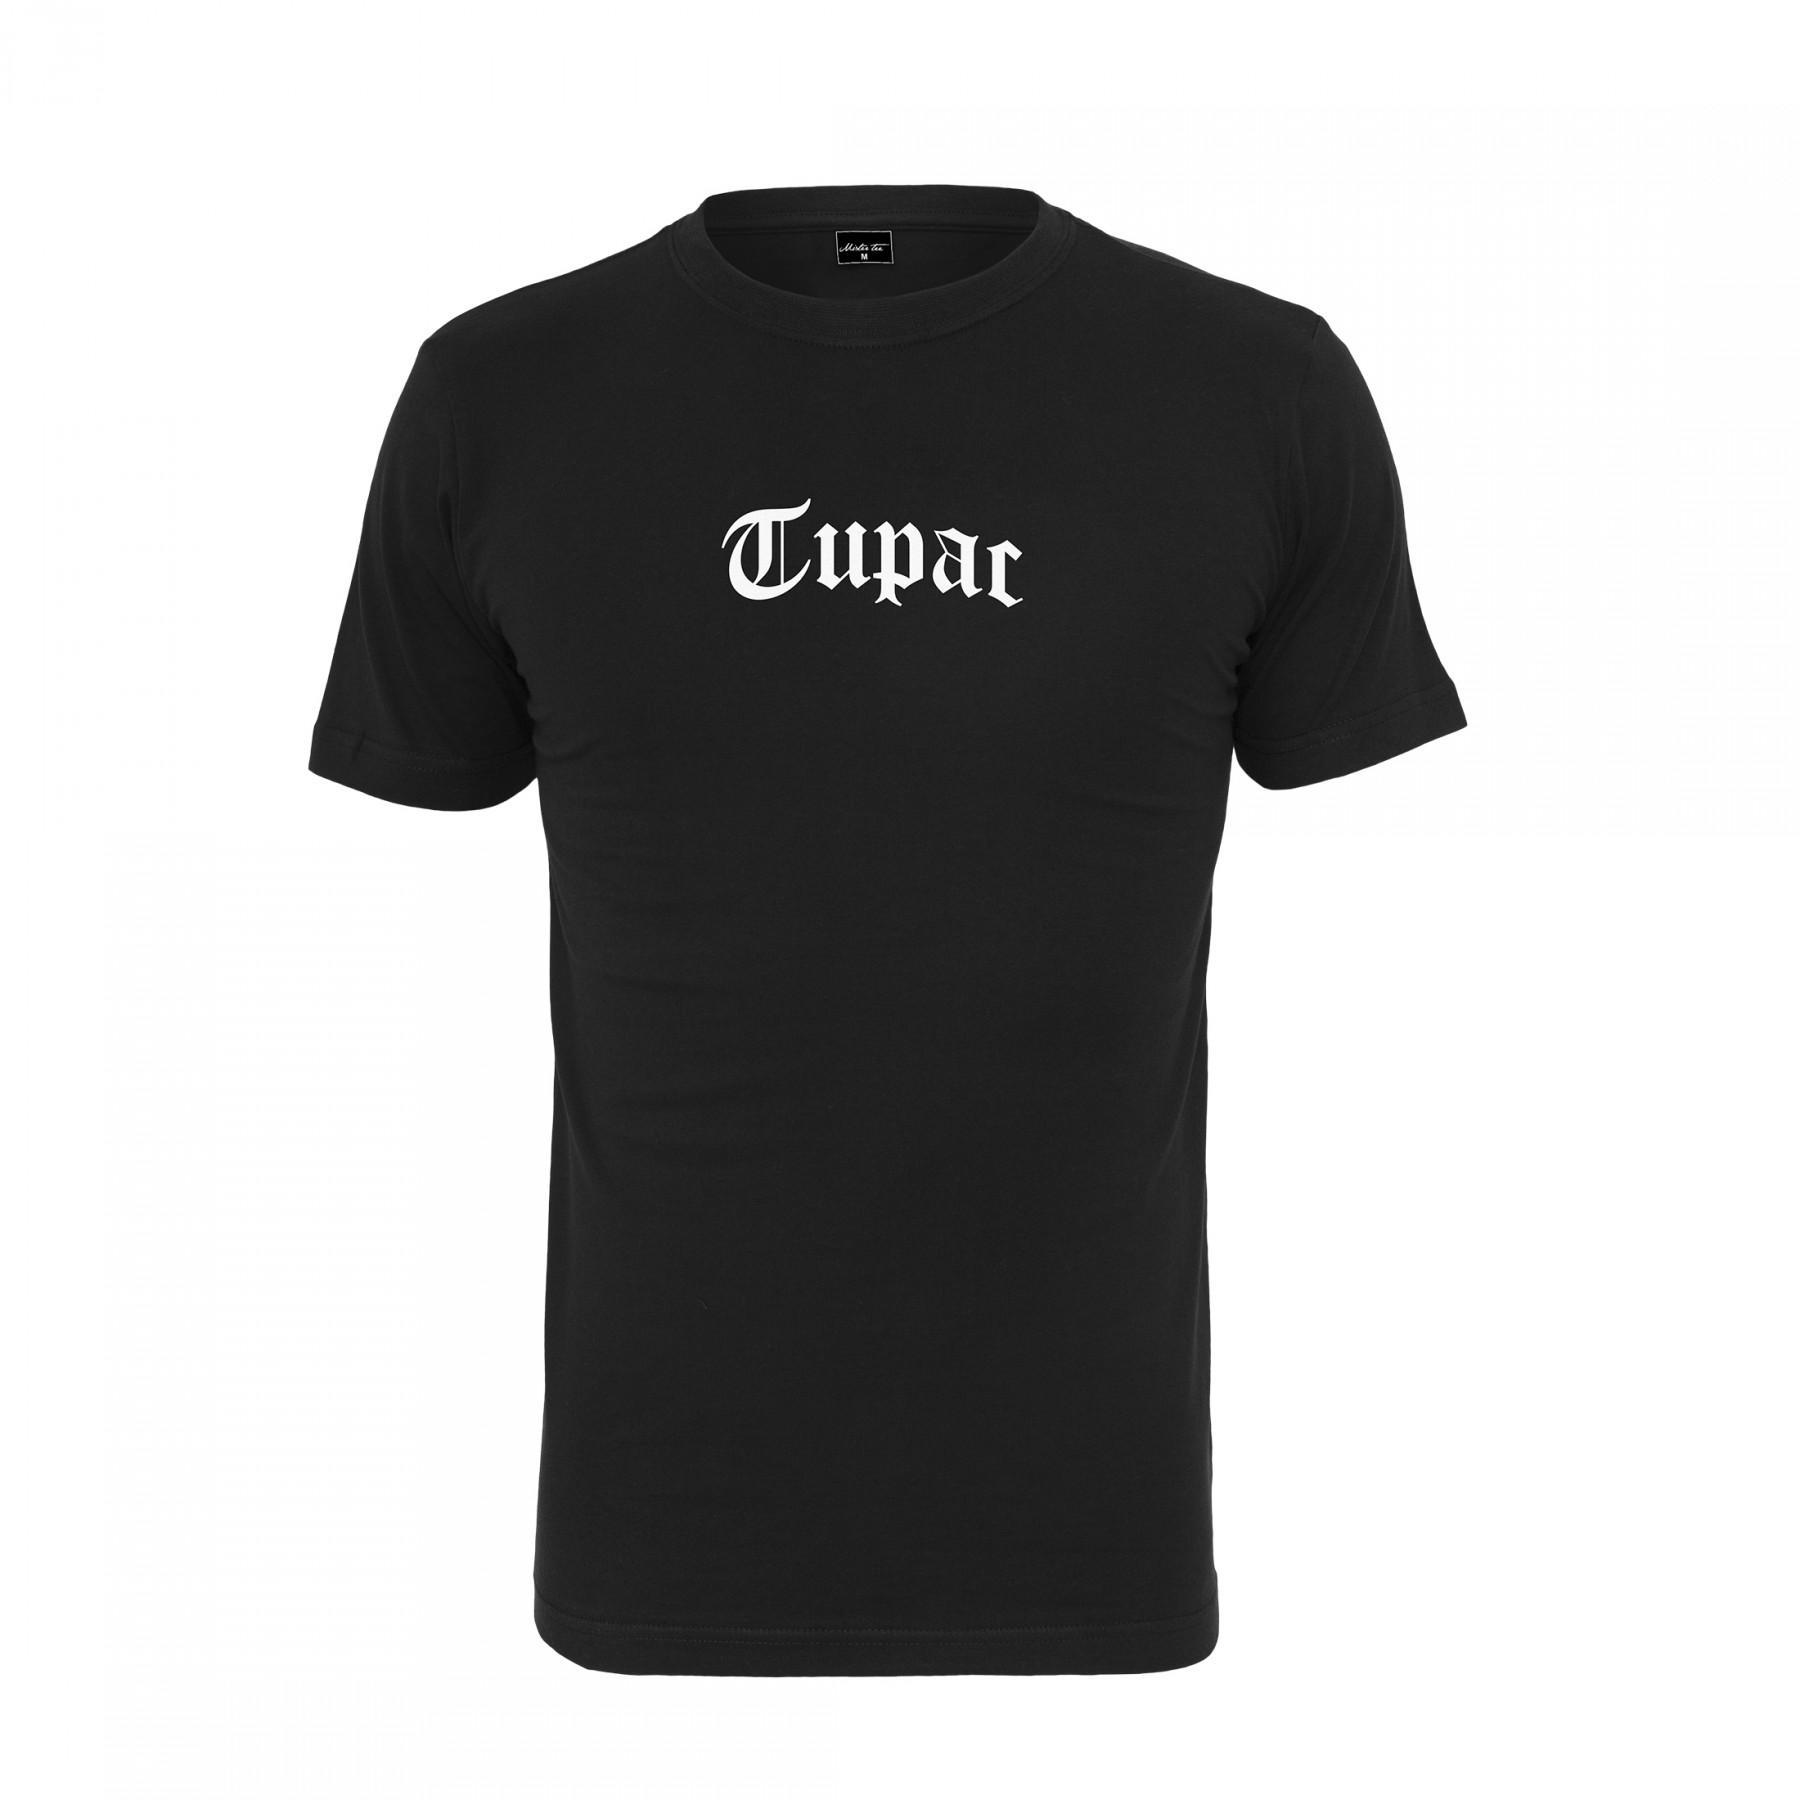 Camiseta Mister Tee tupac ba